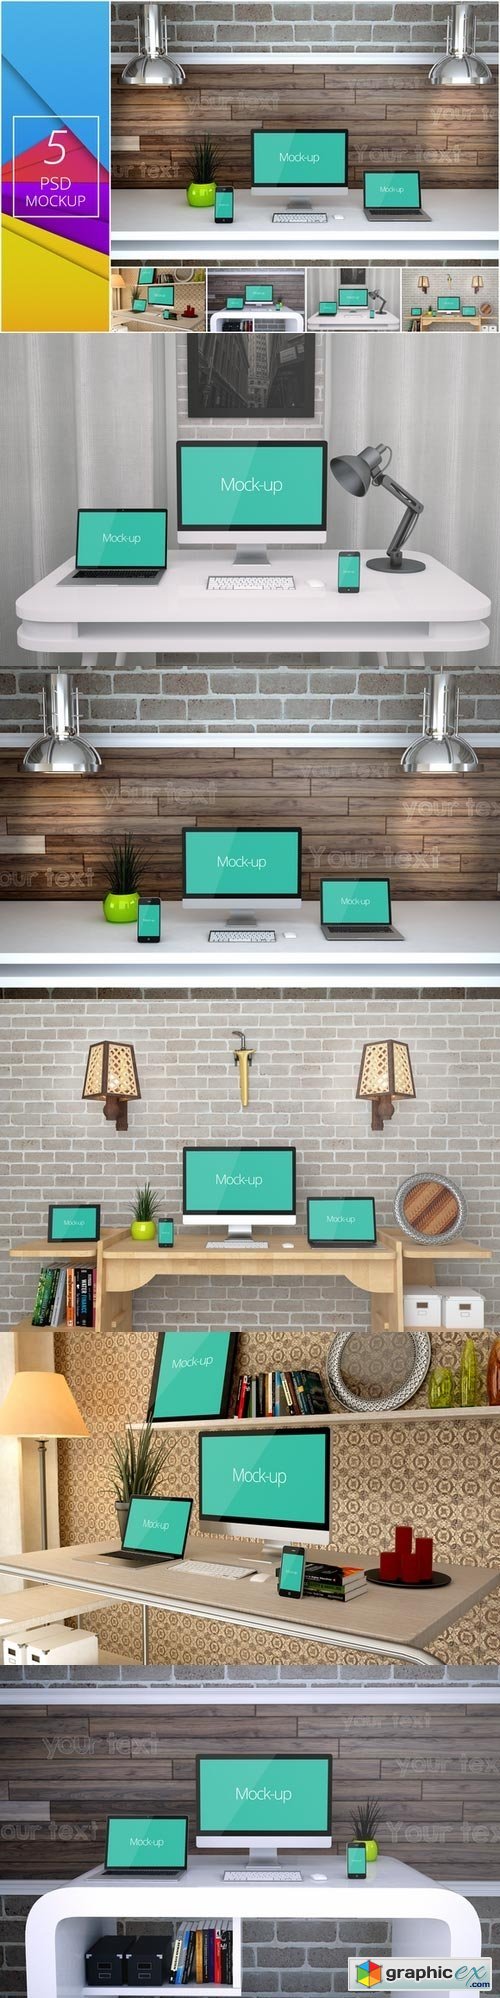 5 PSD Mockups - Interior Work Desk